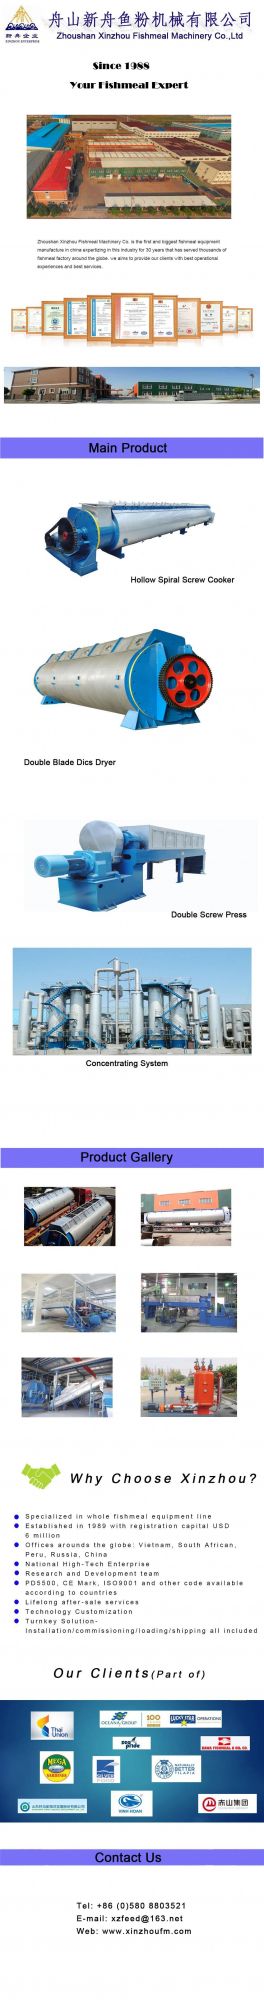 Mechanical Seal for Evaporator in Fishmeal Machine (Xinzhou Brand)